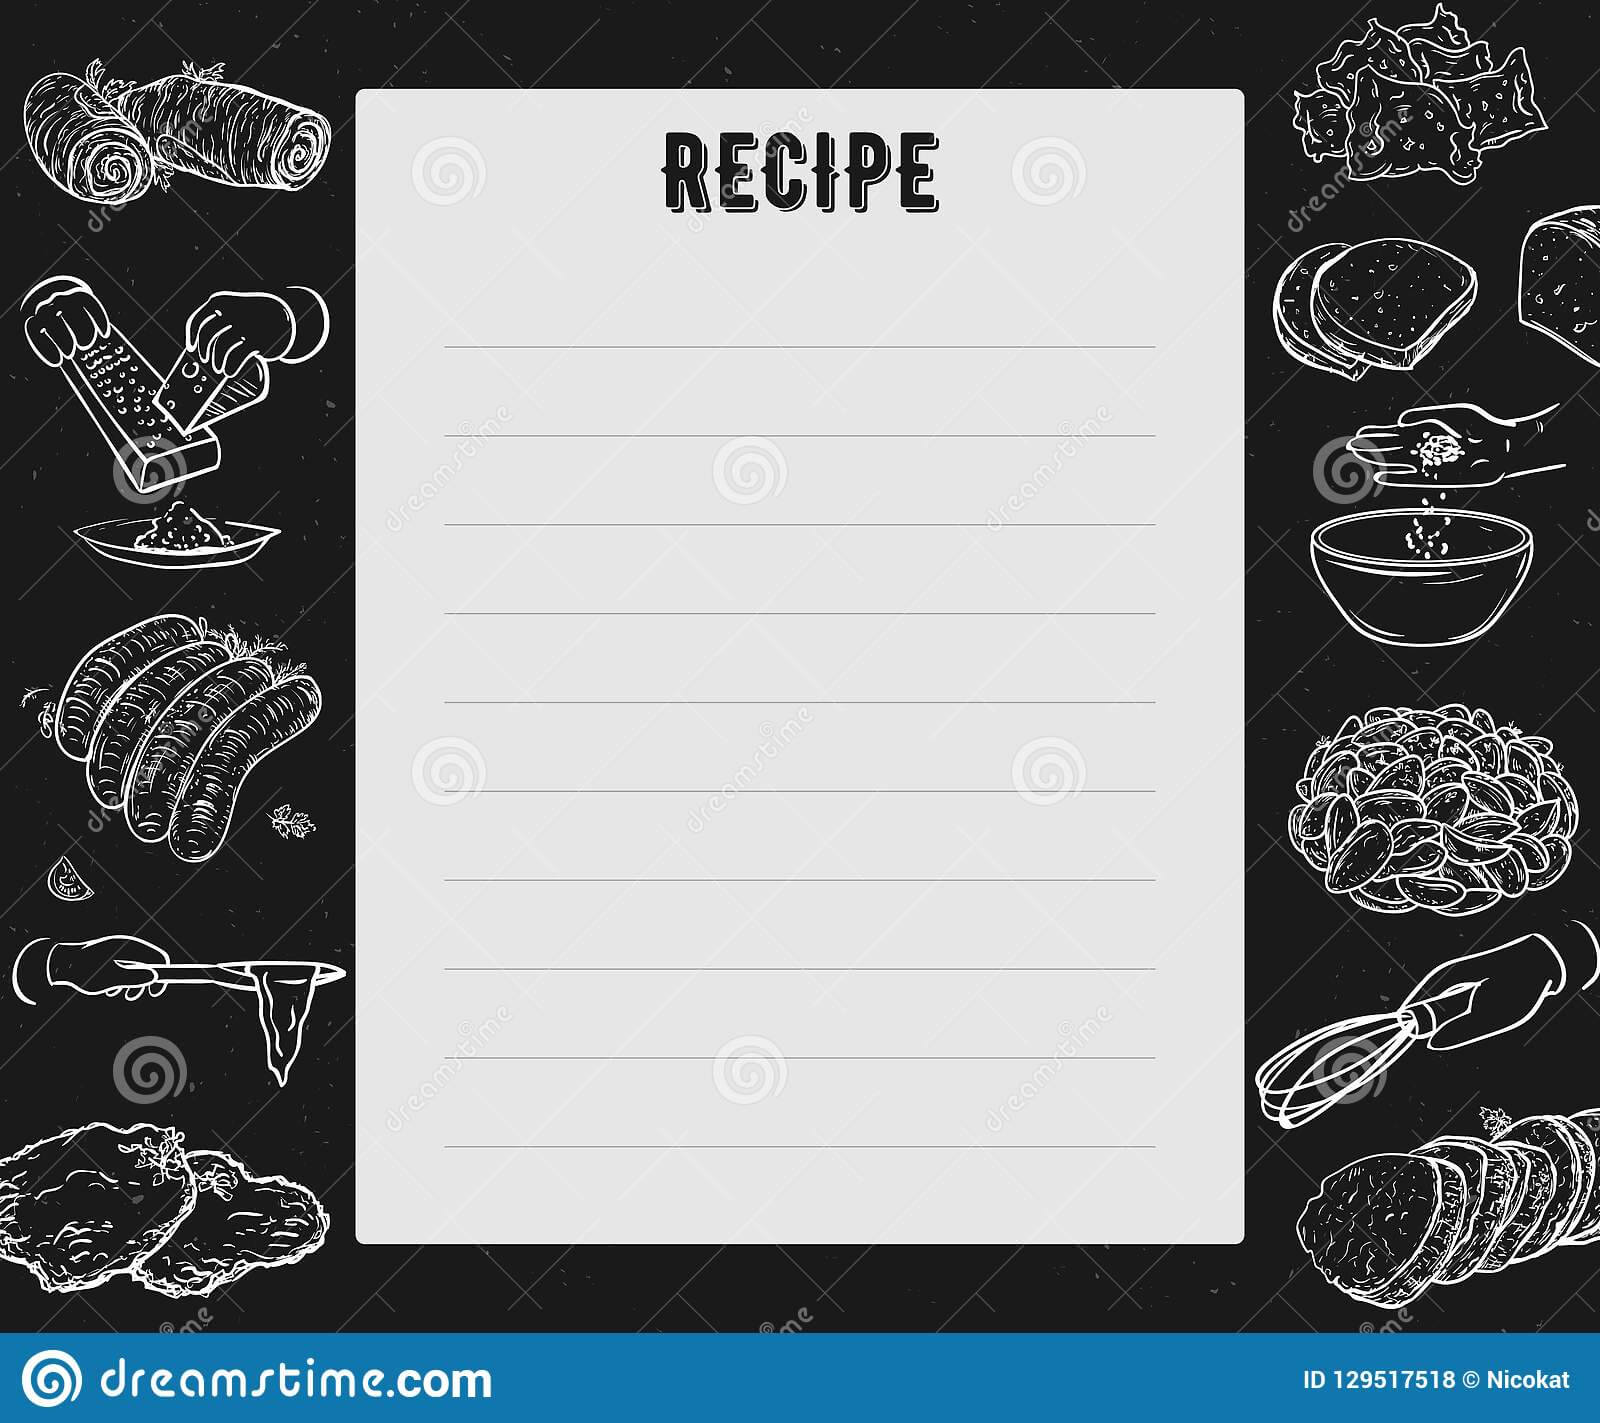 Recipe Card. Cookbook Page. Design Template With Hands With Regard To Recipe Card Design Template